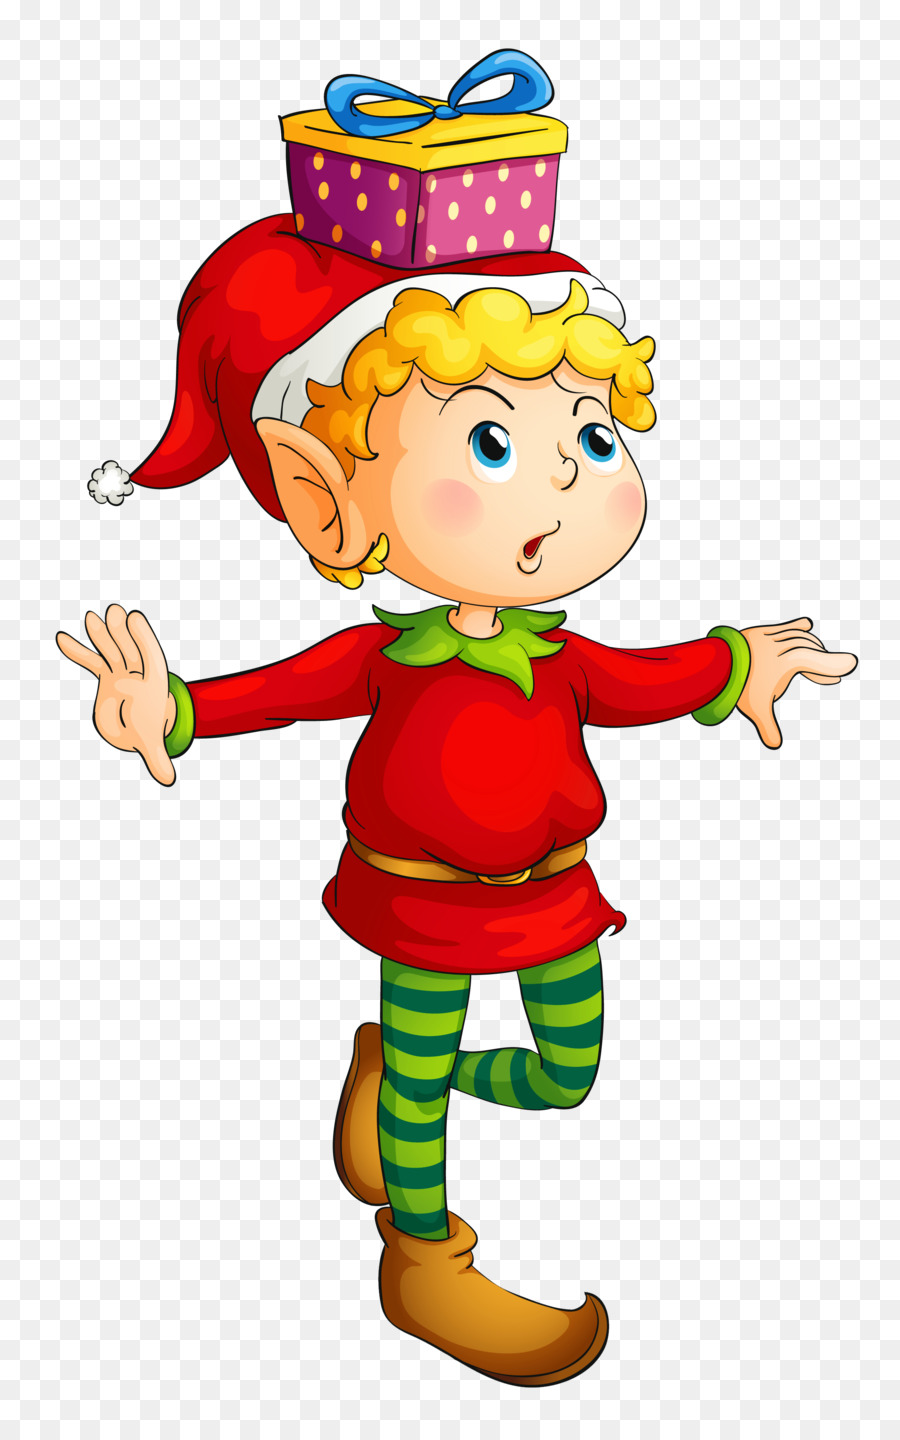 The Elf on the Shelf Santa Claus Christmas elf Clip art - Elf png download - 2224*3510 - Free Transparent Elf On The Shelf png Download.